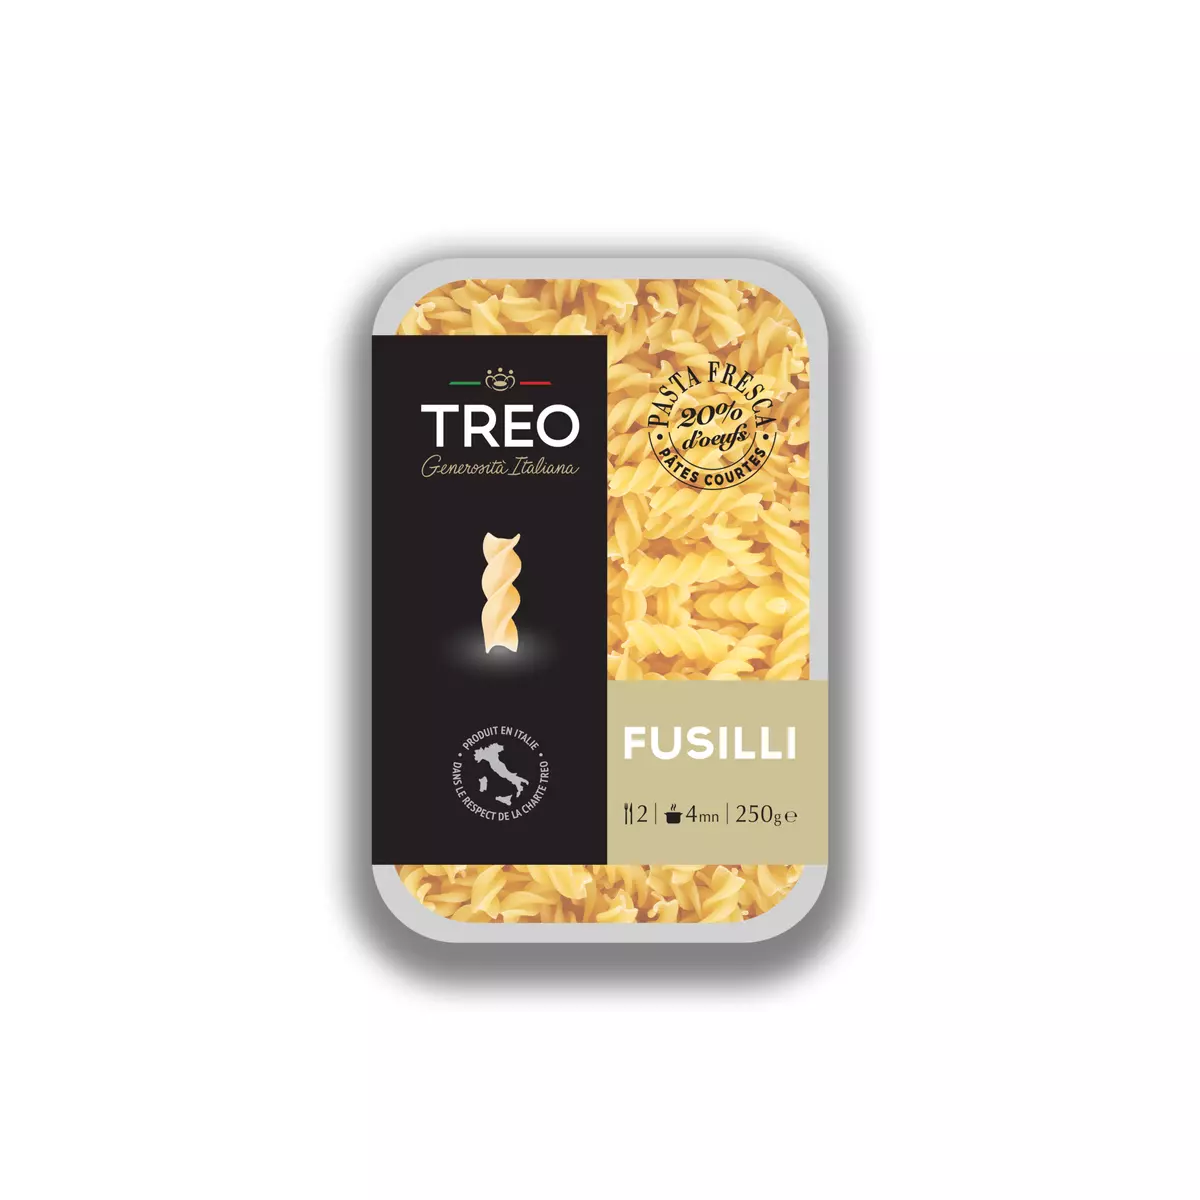 TREO Fusili 2 portions 250g